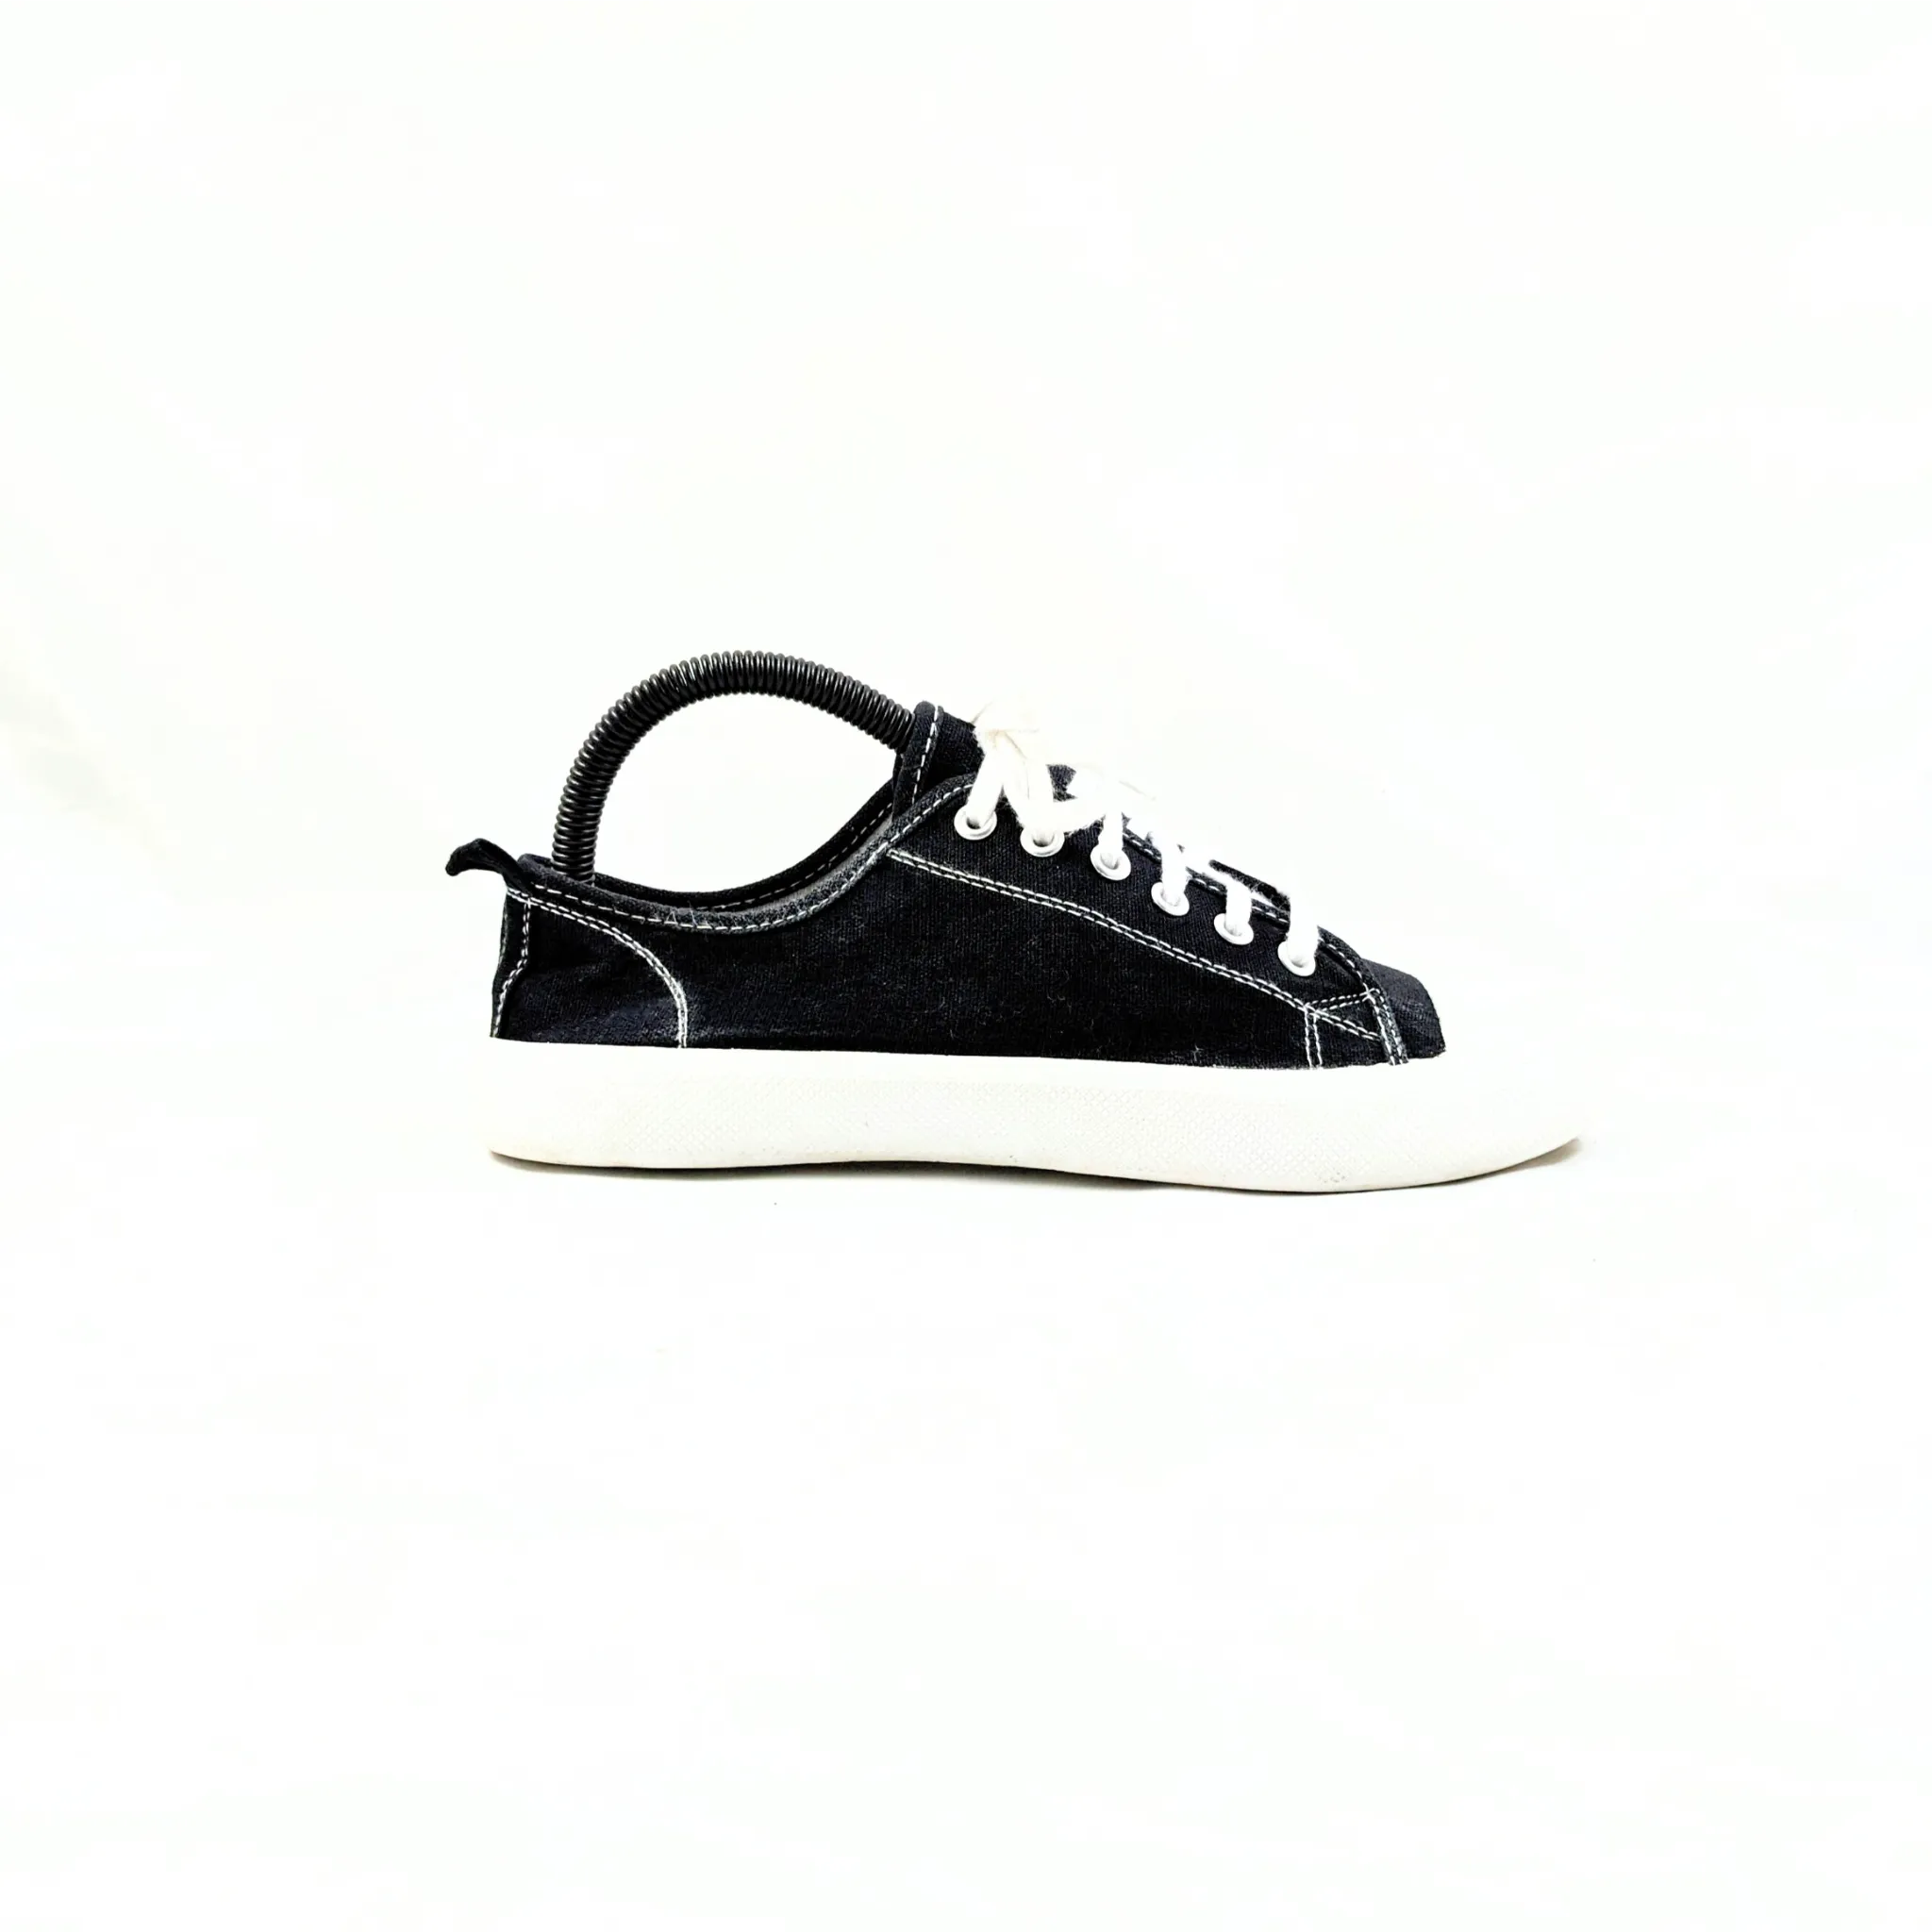 Anko Black Sneakers